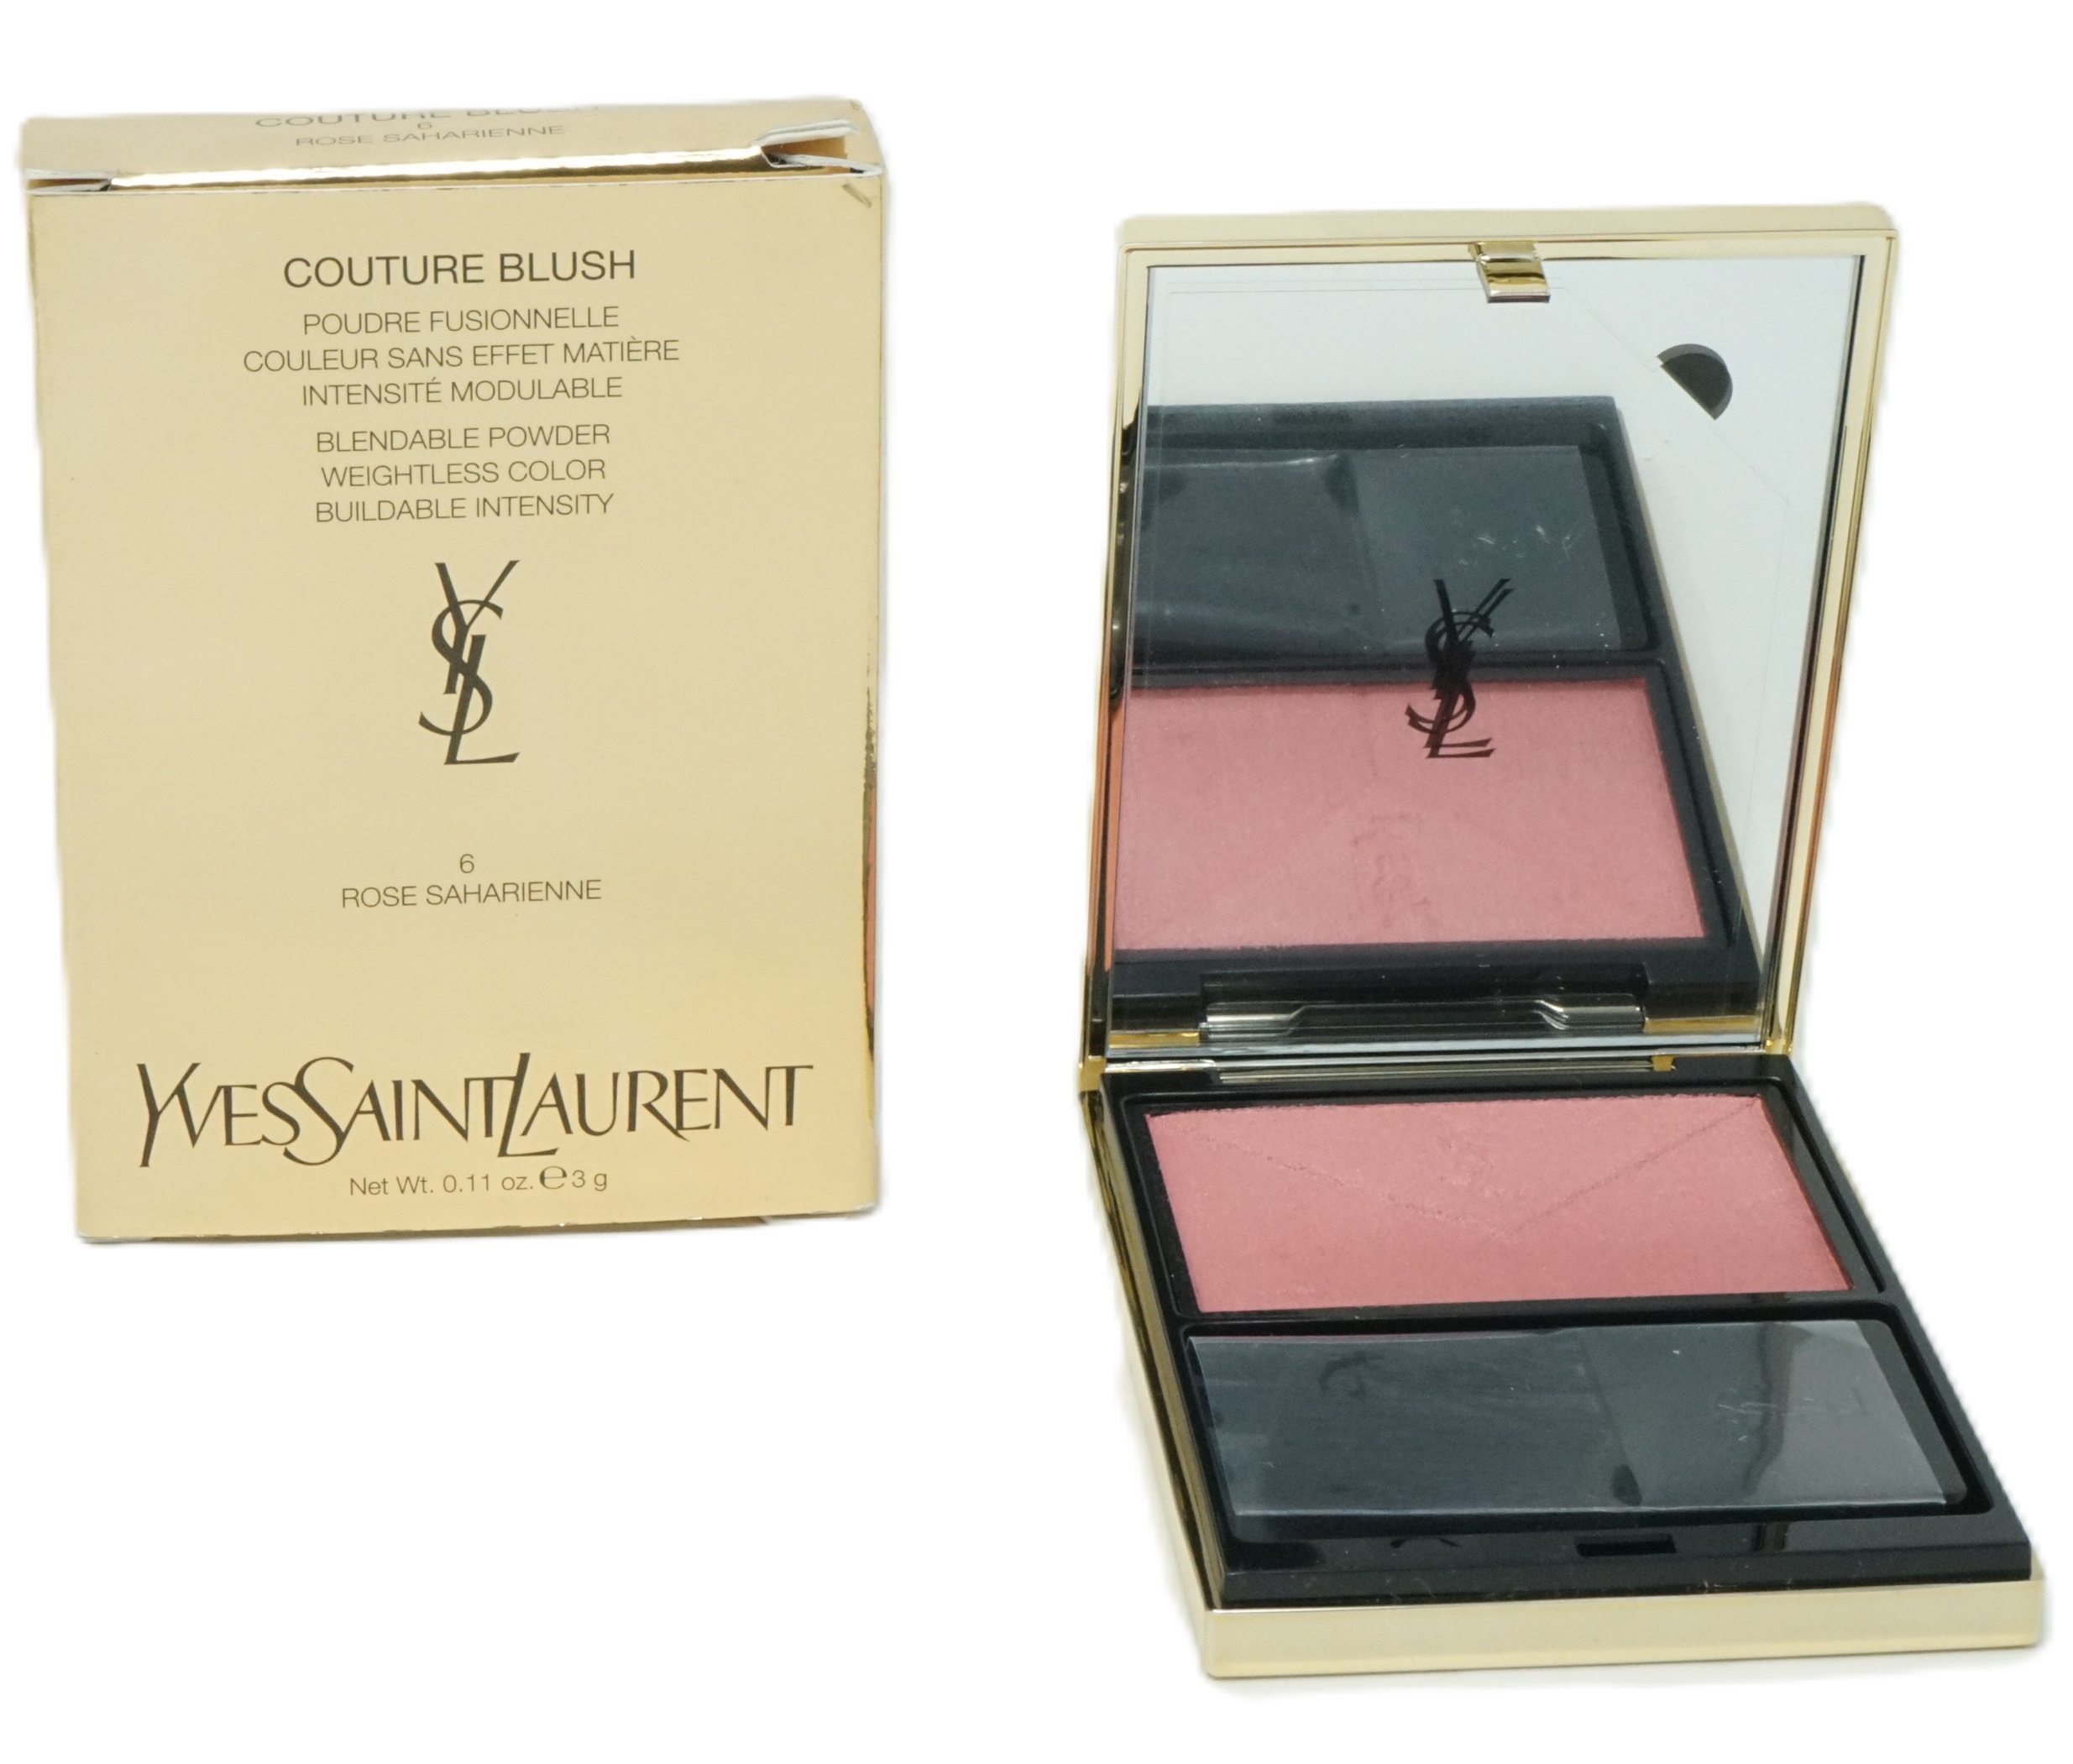 Yves Saint Laurent Couture Blush Blendable Powder Puder 3g  Rose Saharienne 6